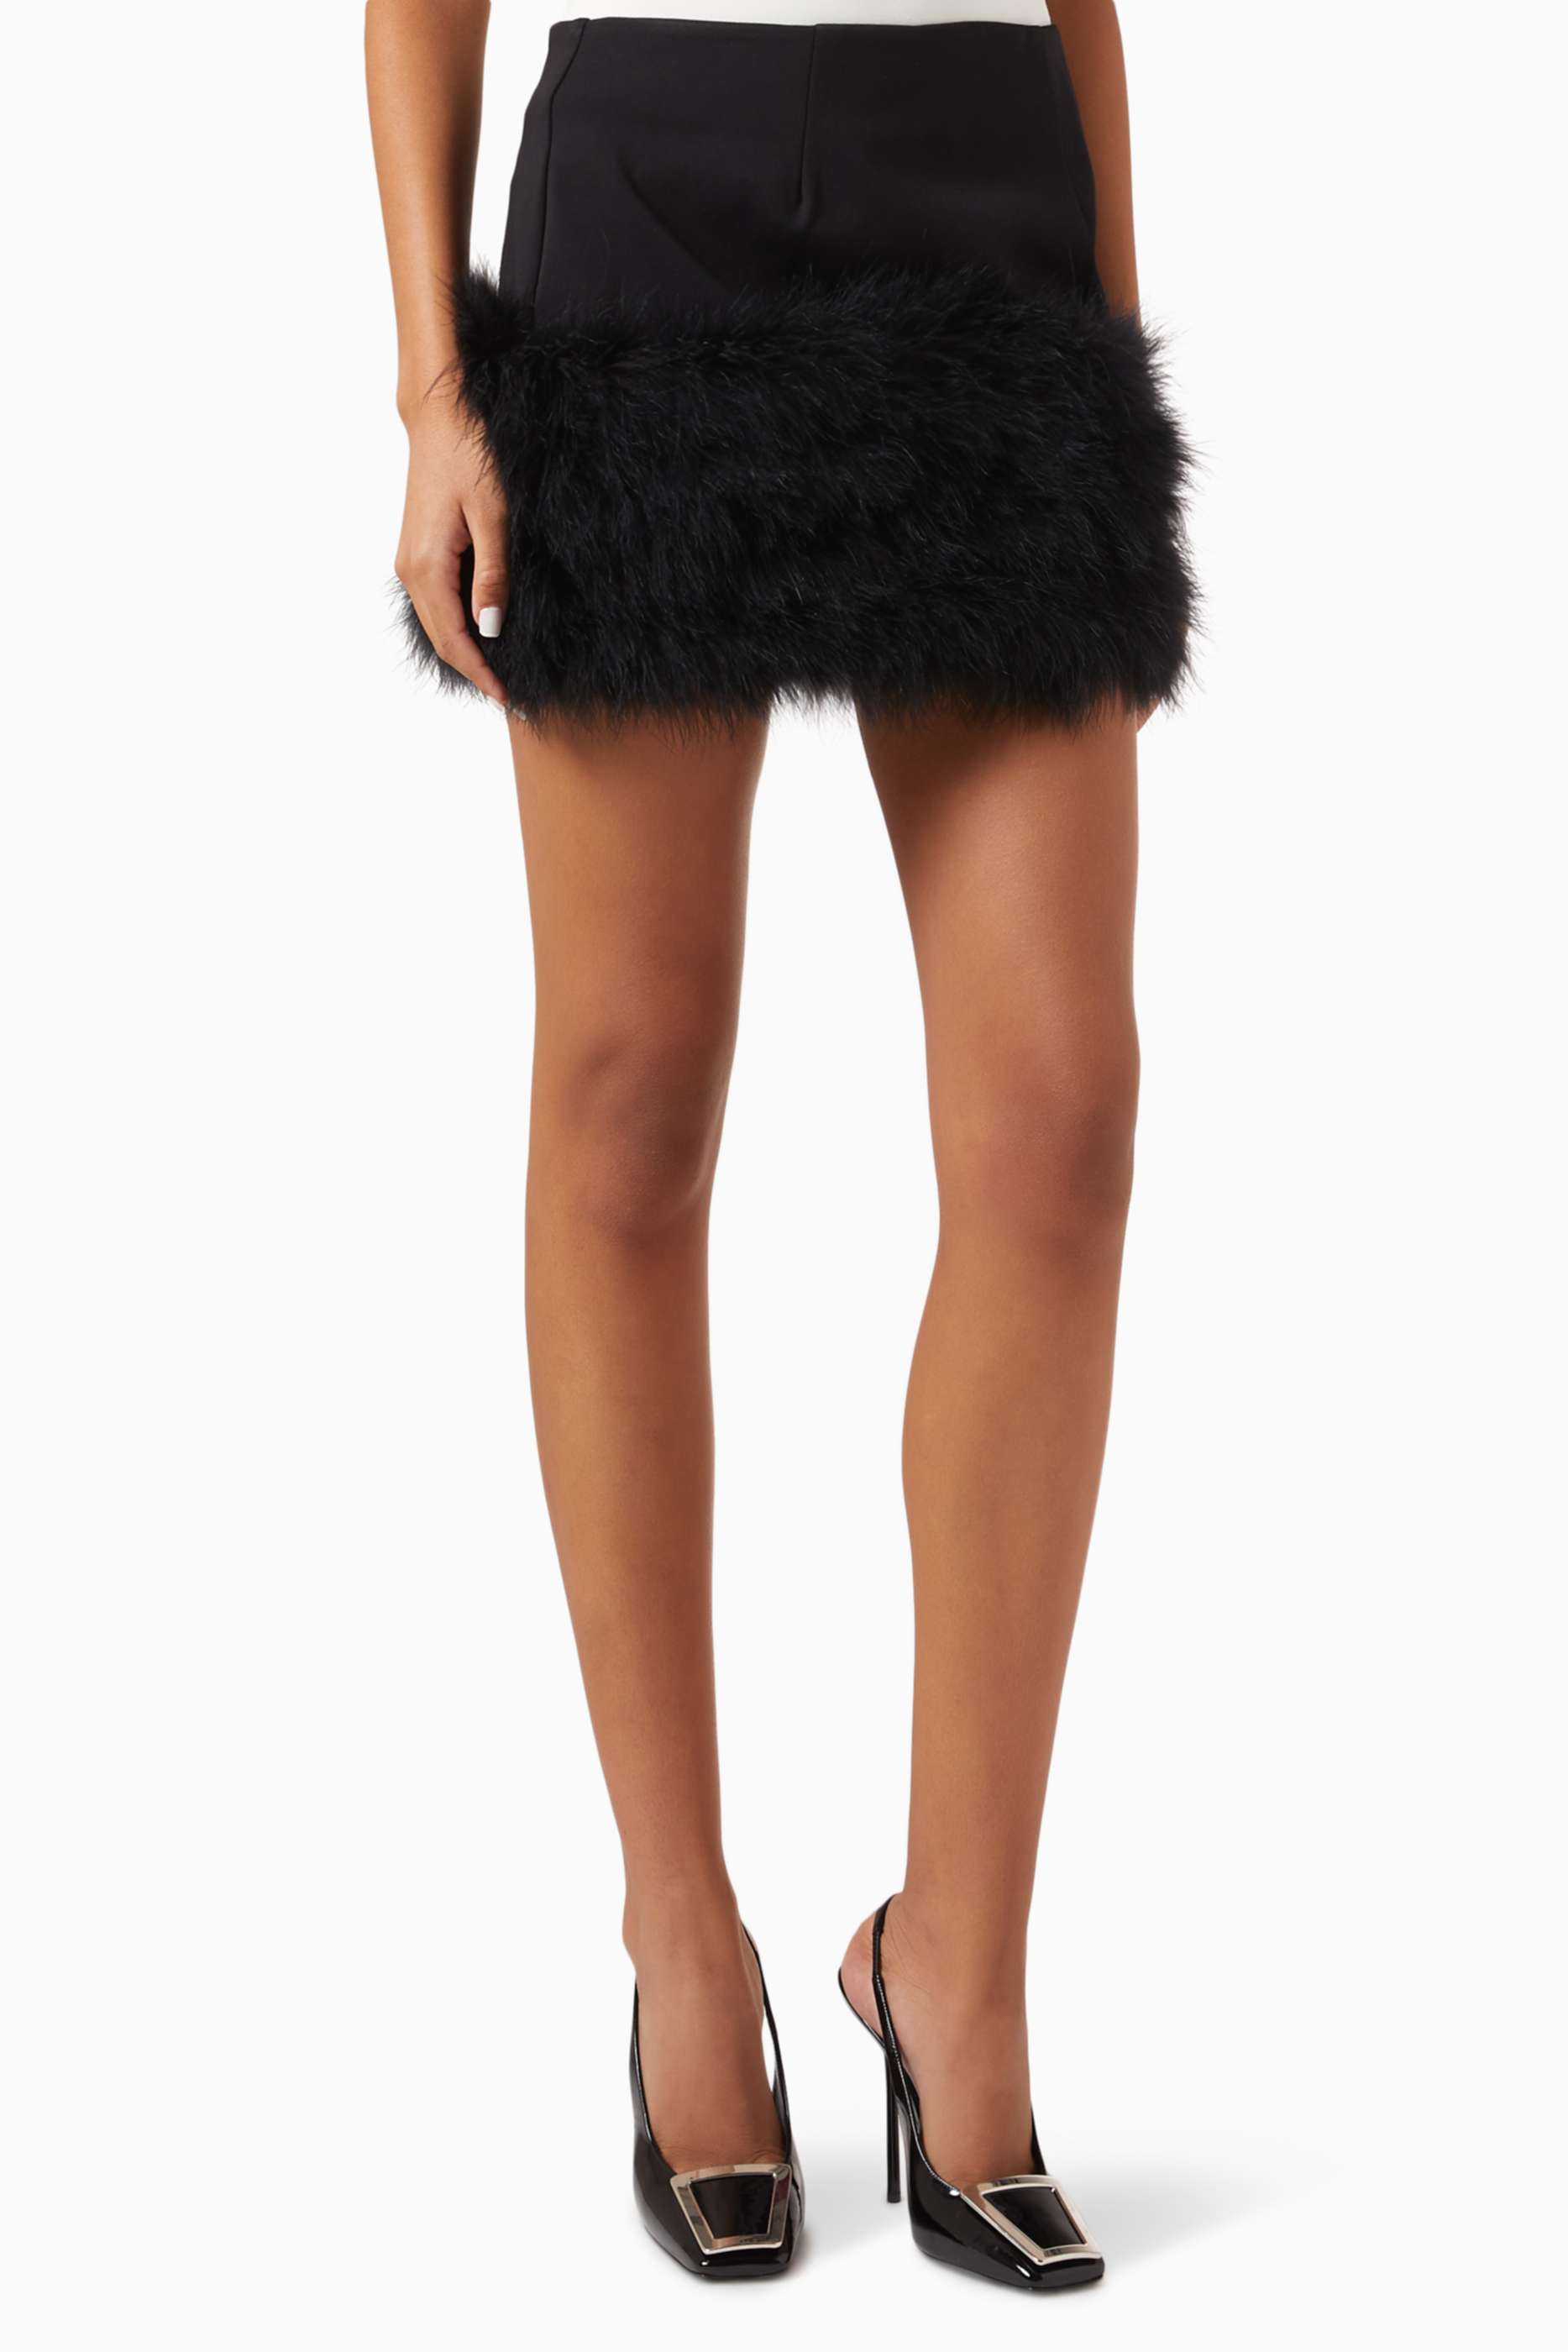 shop-16arlington-haile-feather-mini-skirt-in-punto-milano-knit-for-women